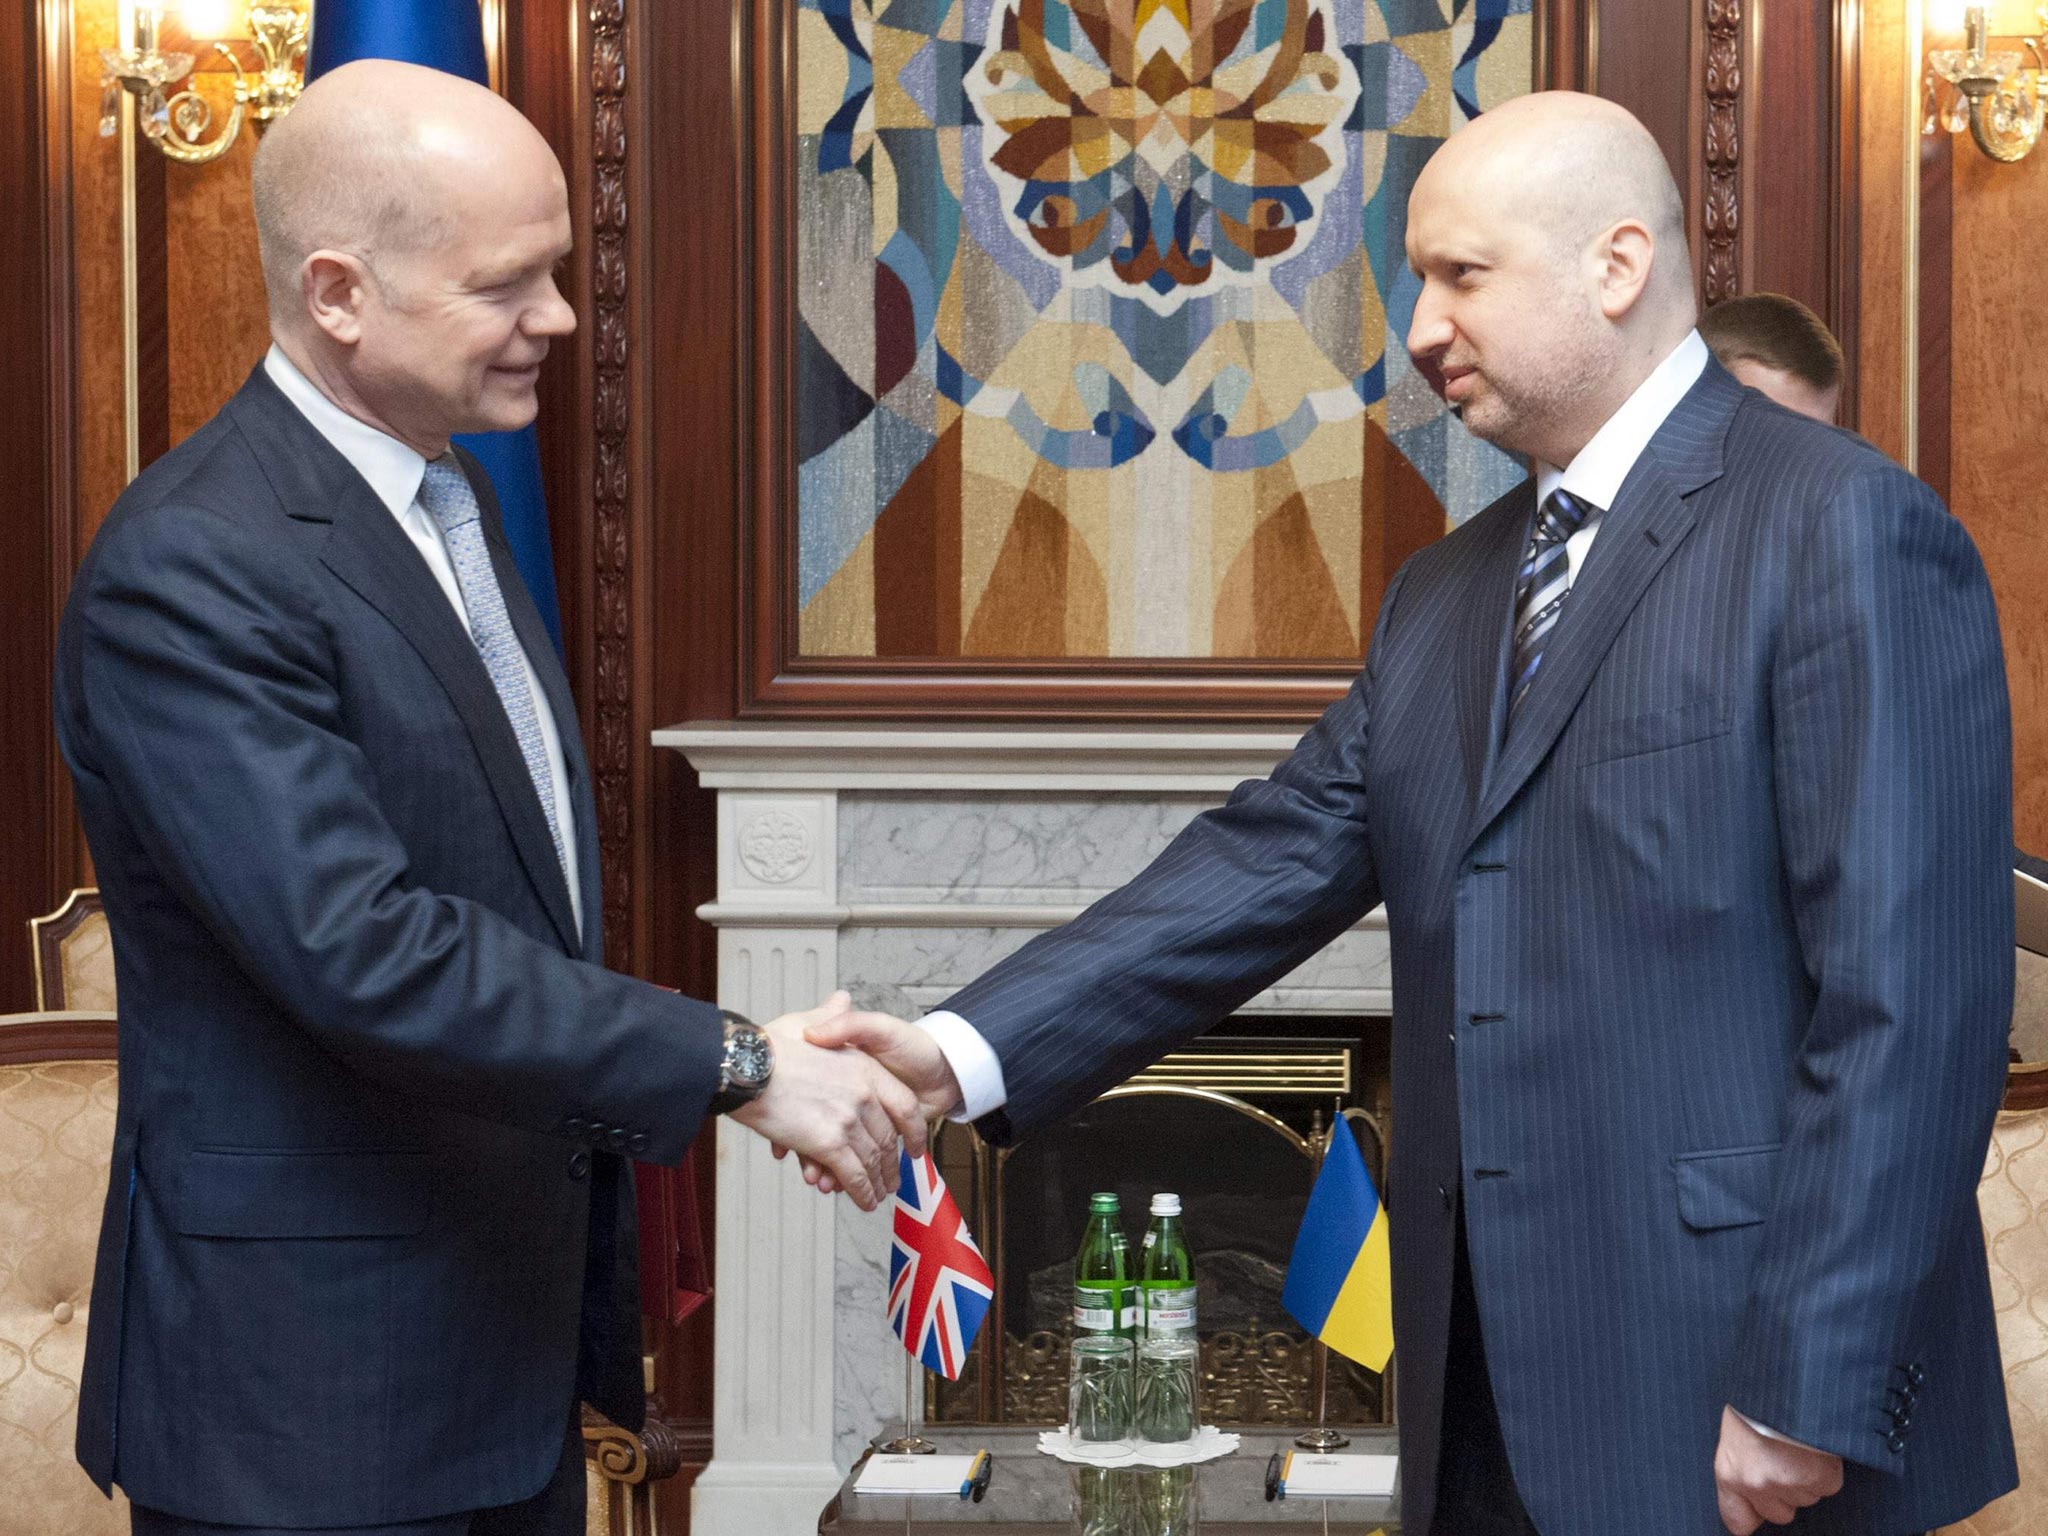 Ukraine's acting President Oleksander Turchinov meets with British Foreign Secretary William Hague in Kiev